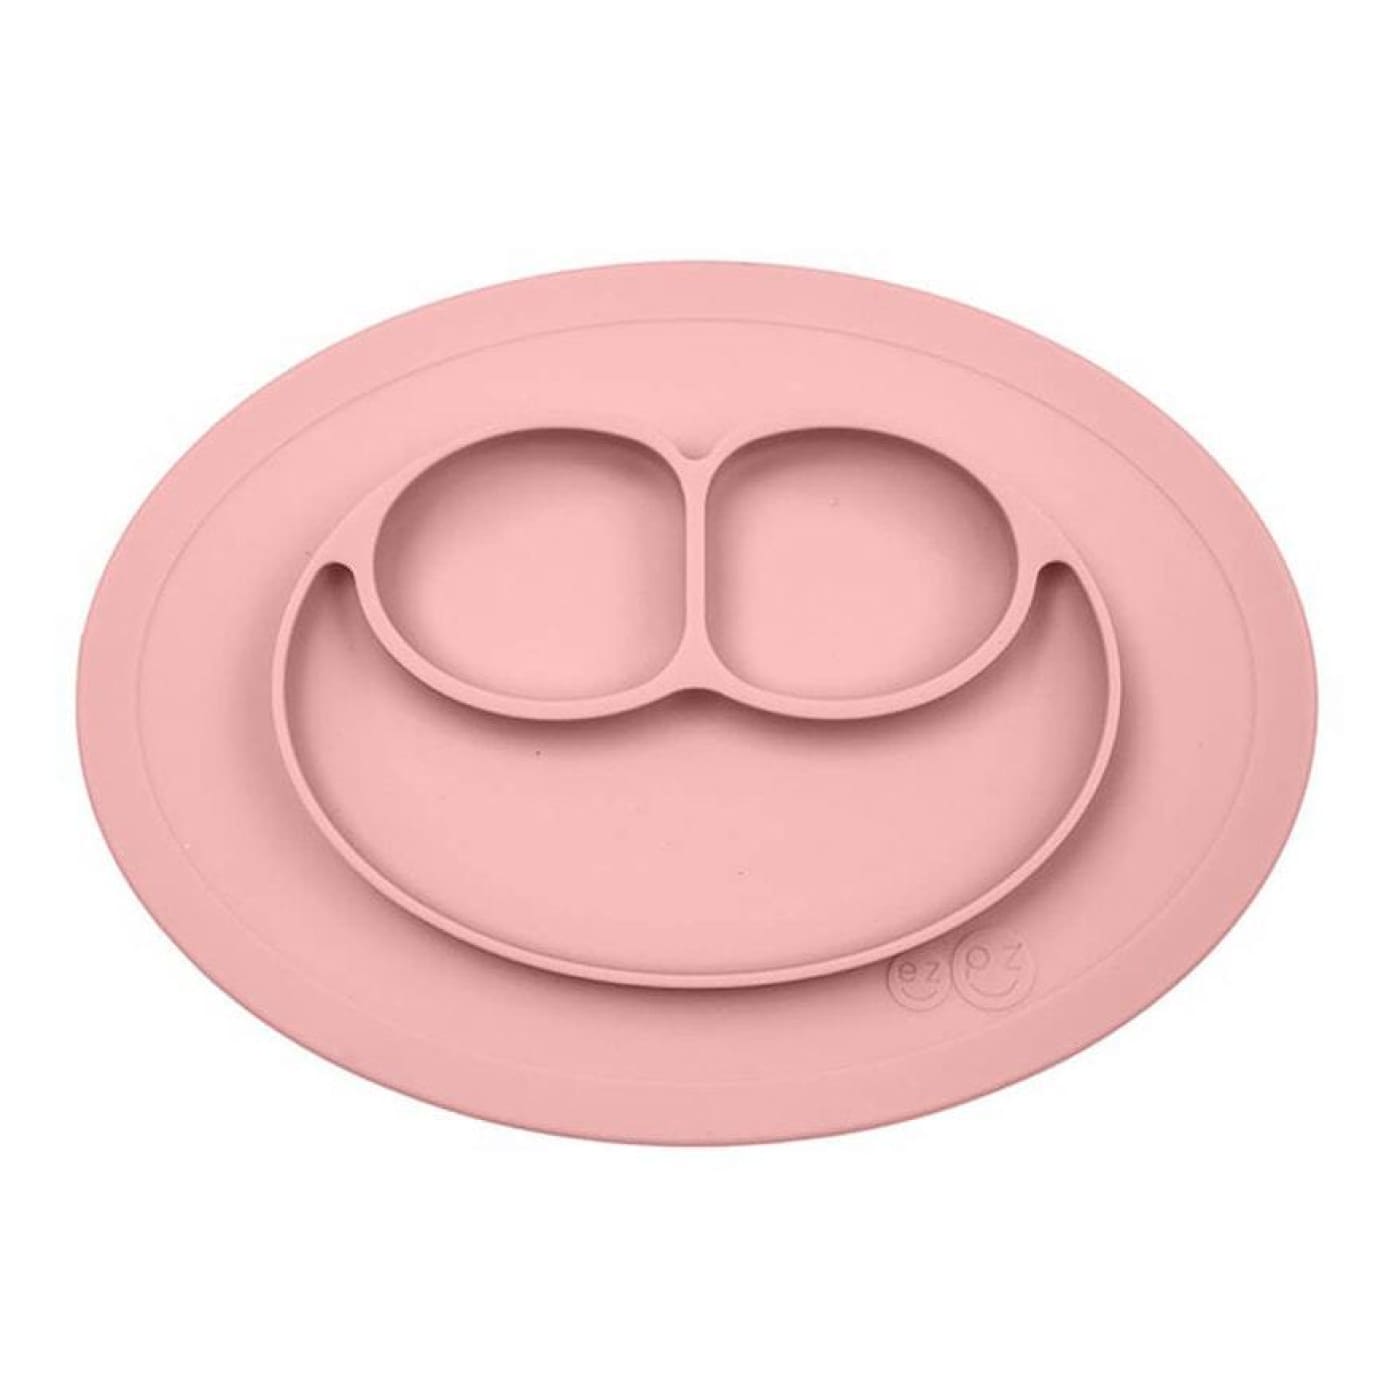 EZPZ Mini Mat - Blush - Blush - NURSING & FEEDING - CUTLERY/PLATES/BOWLS/TOYS